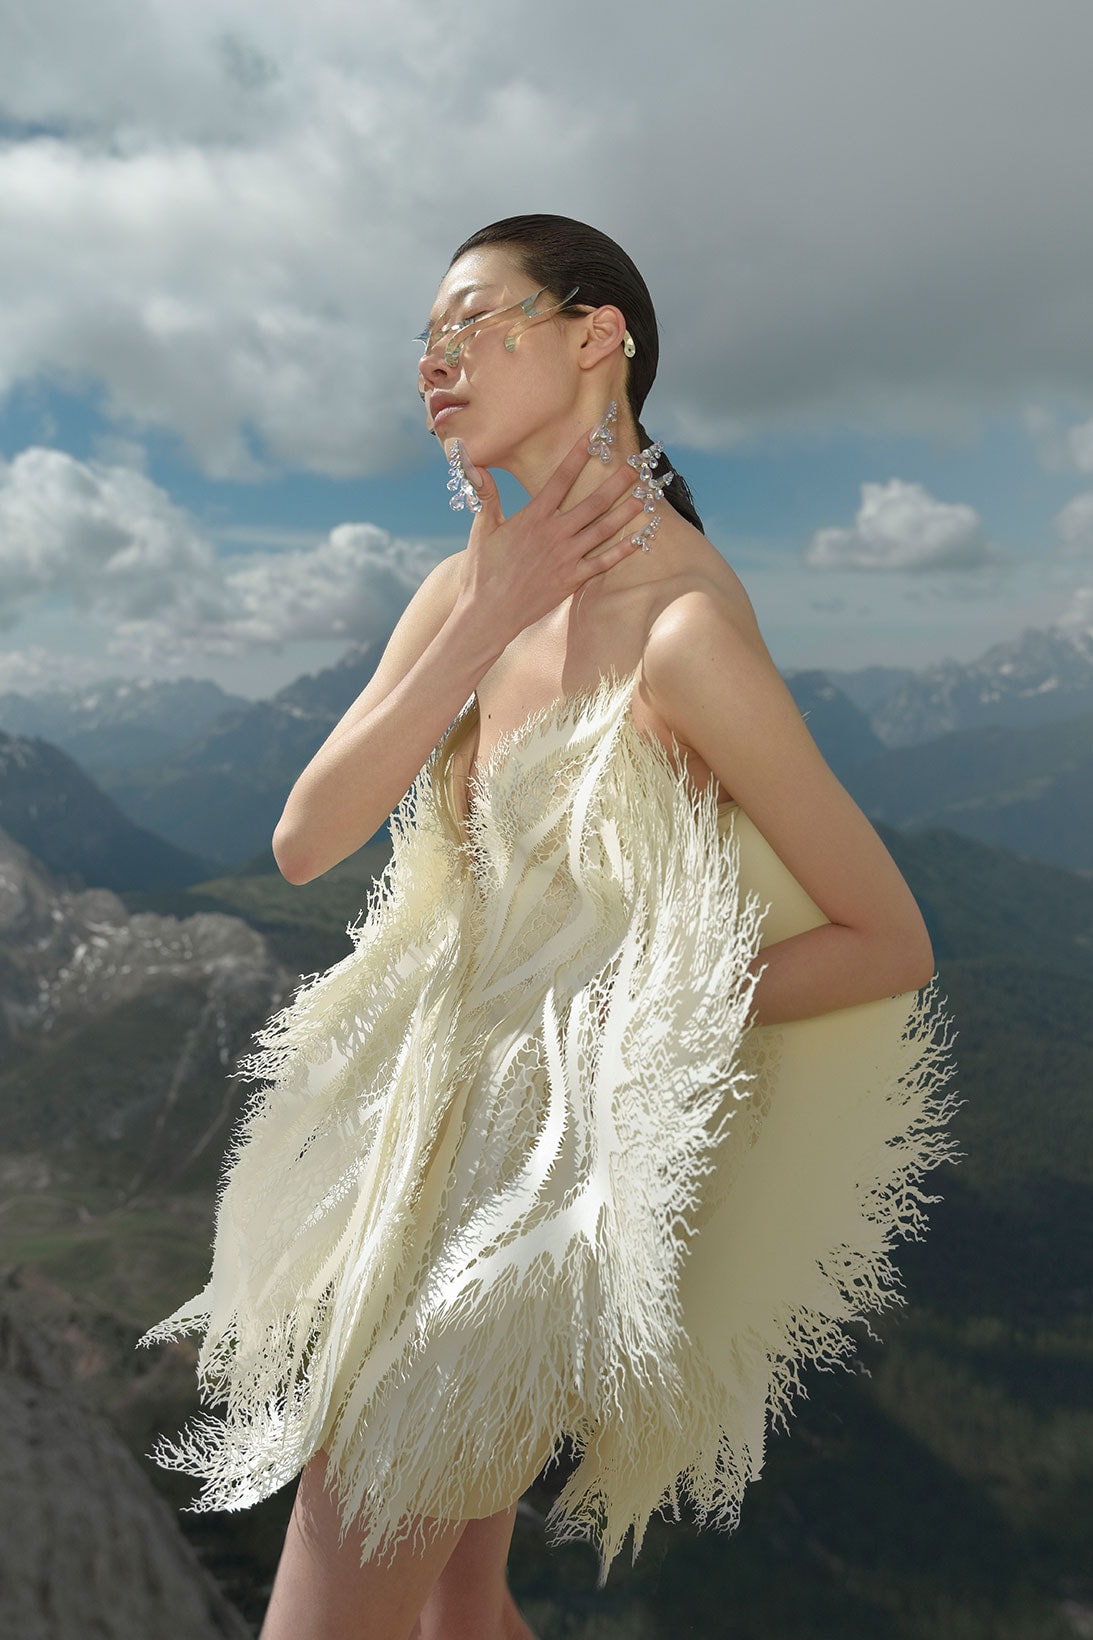 parley iris van herpen earthrise haute couture collaboration dress white nails sky